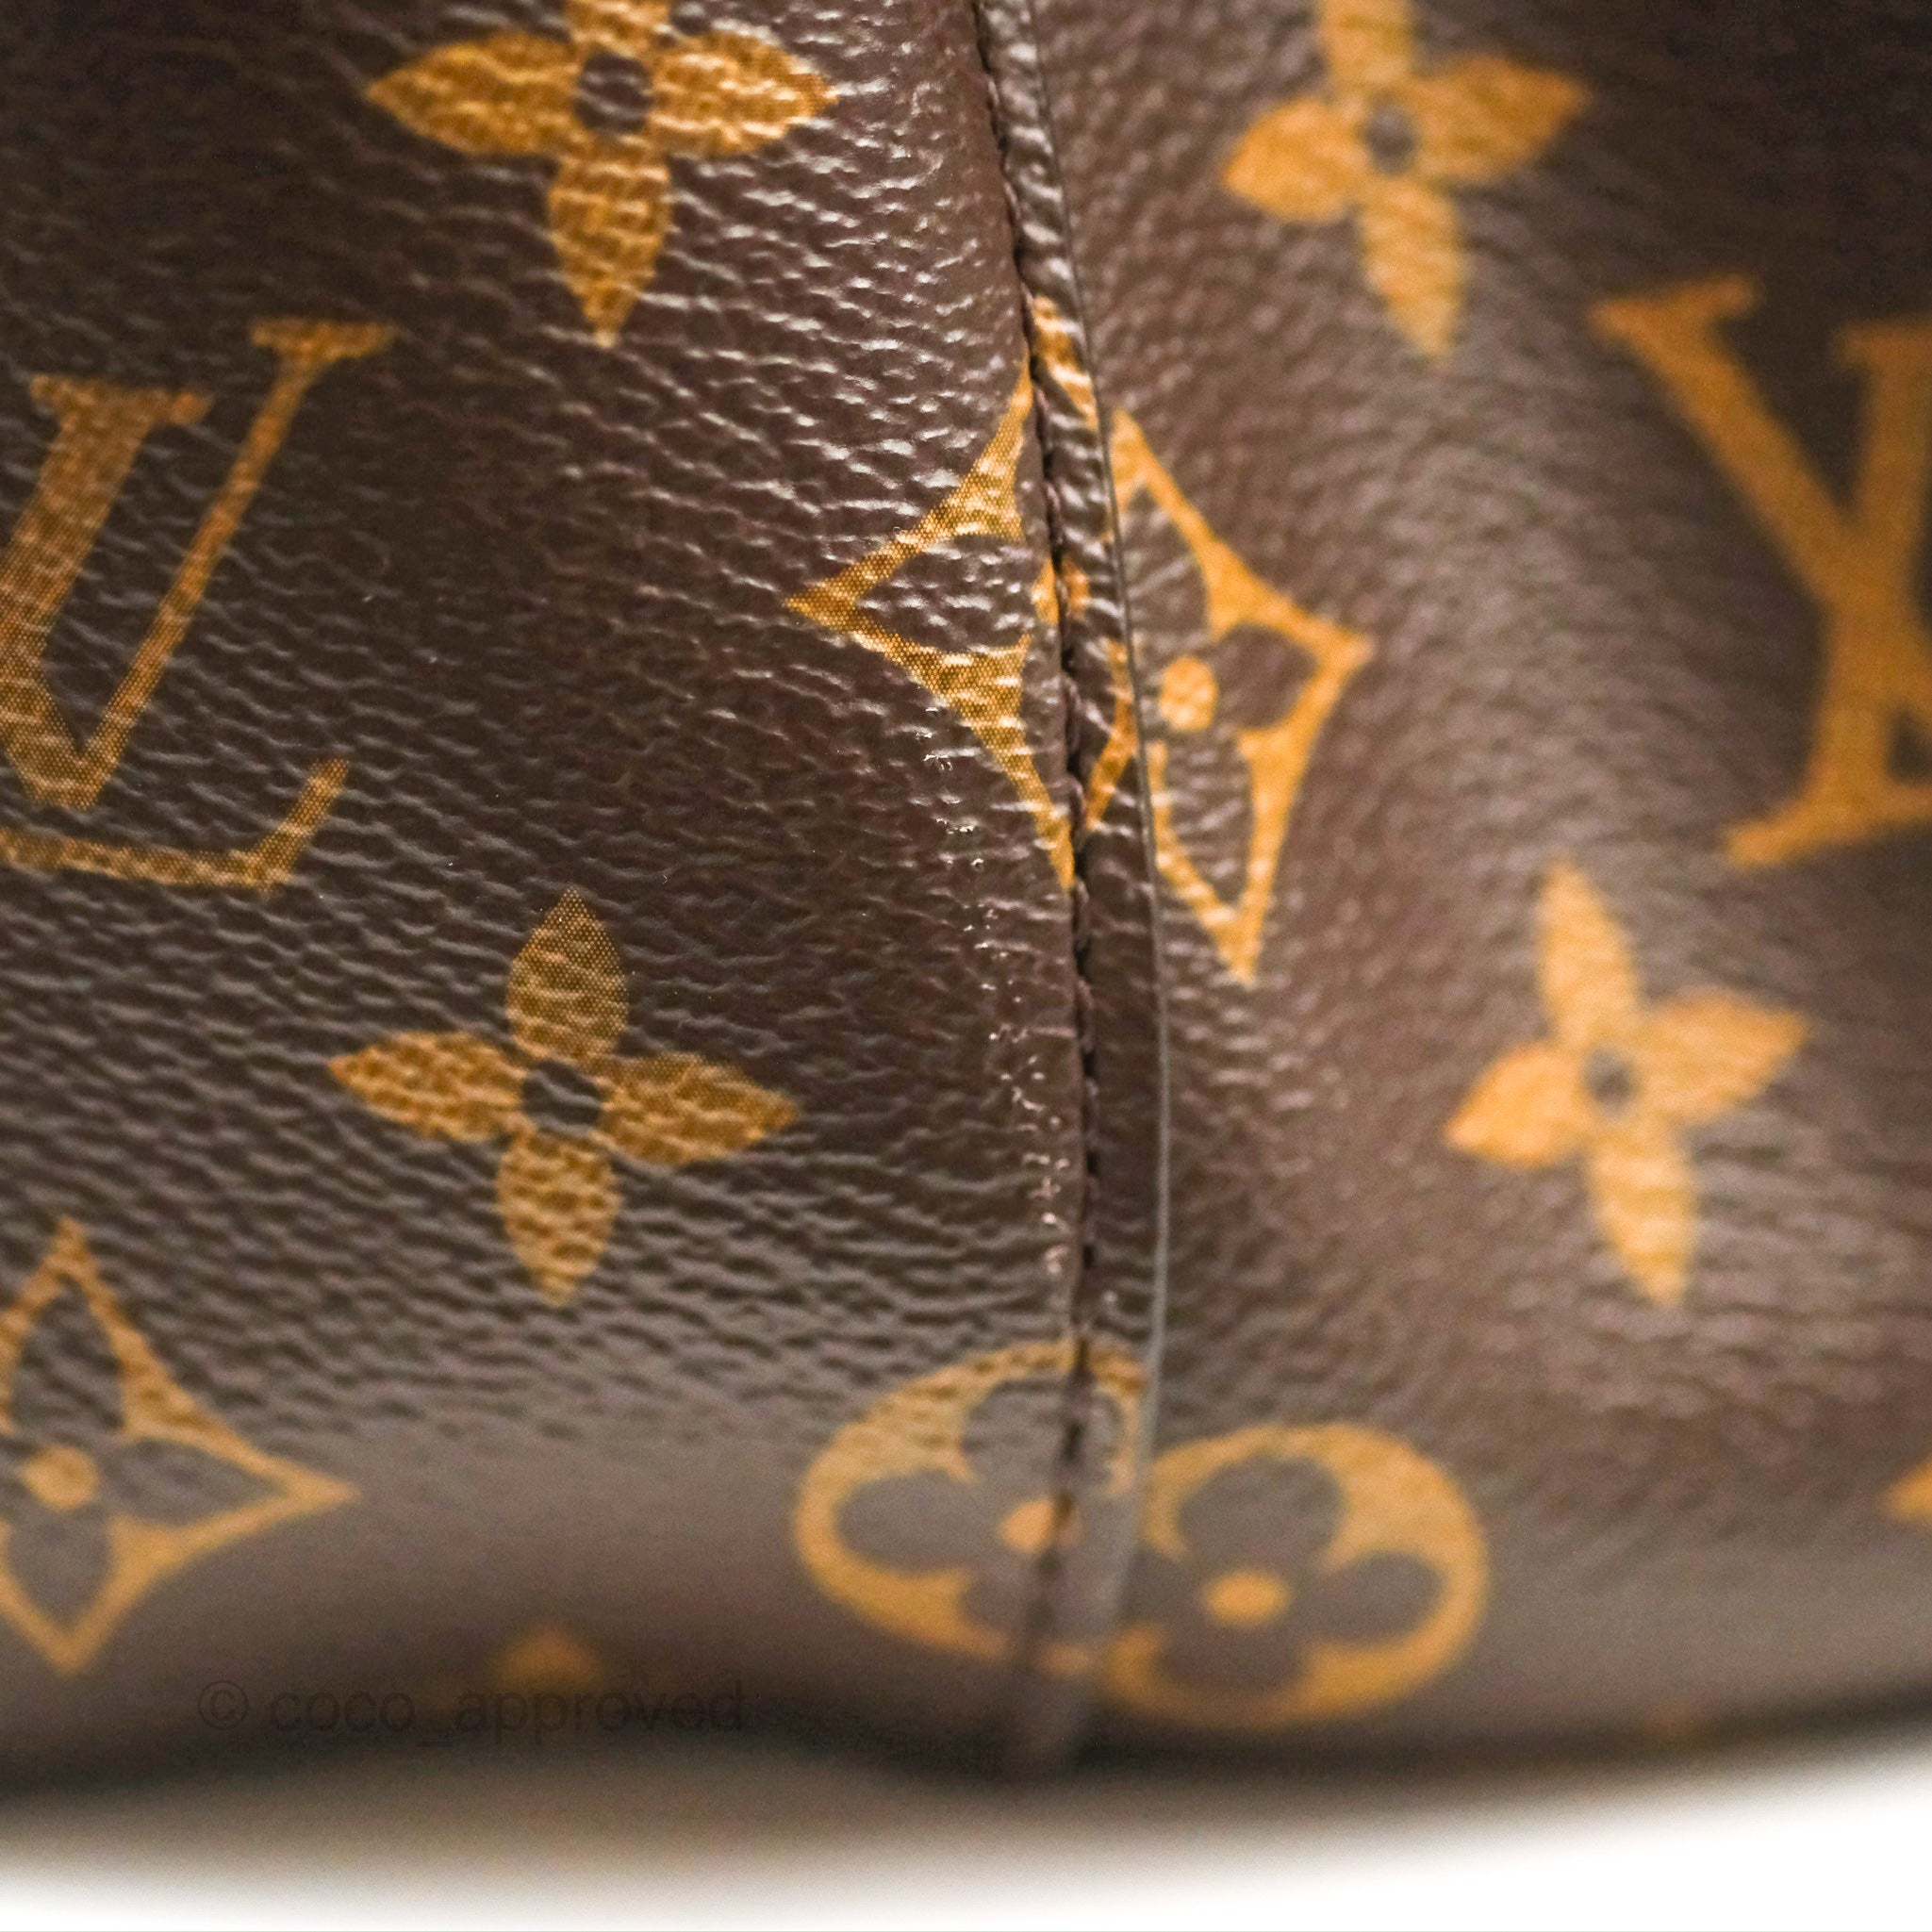 Louis Vuitton Neonoe Bucket Bag MM Monogram Canvas Red – Coco Approved  Studio